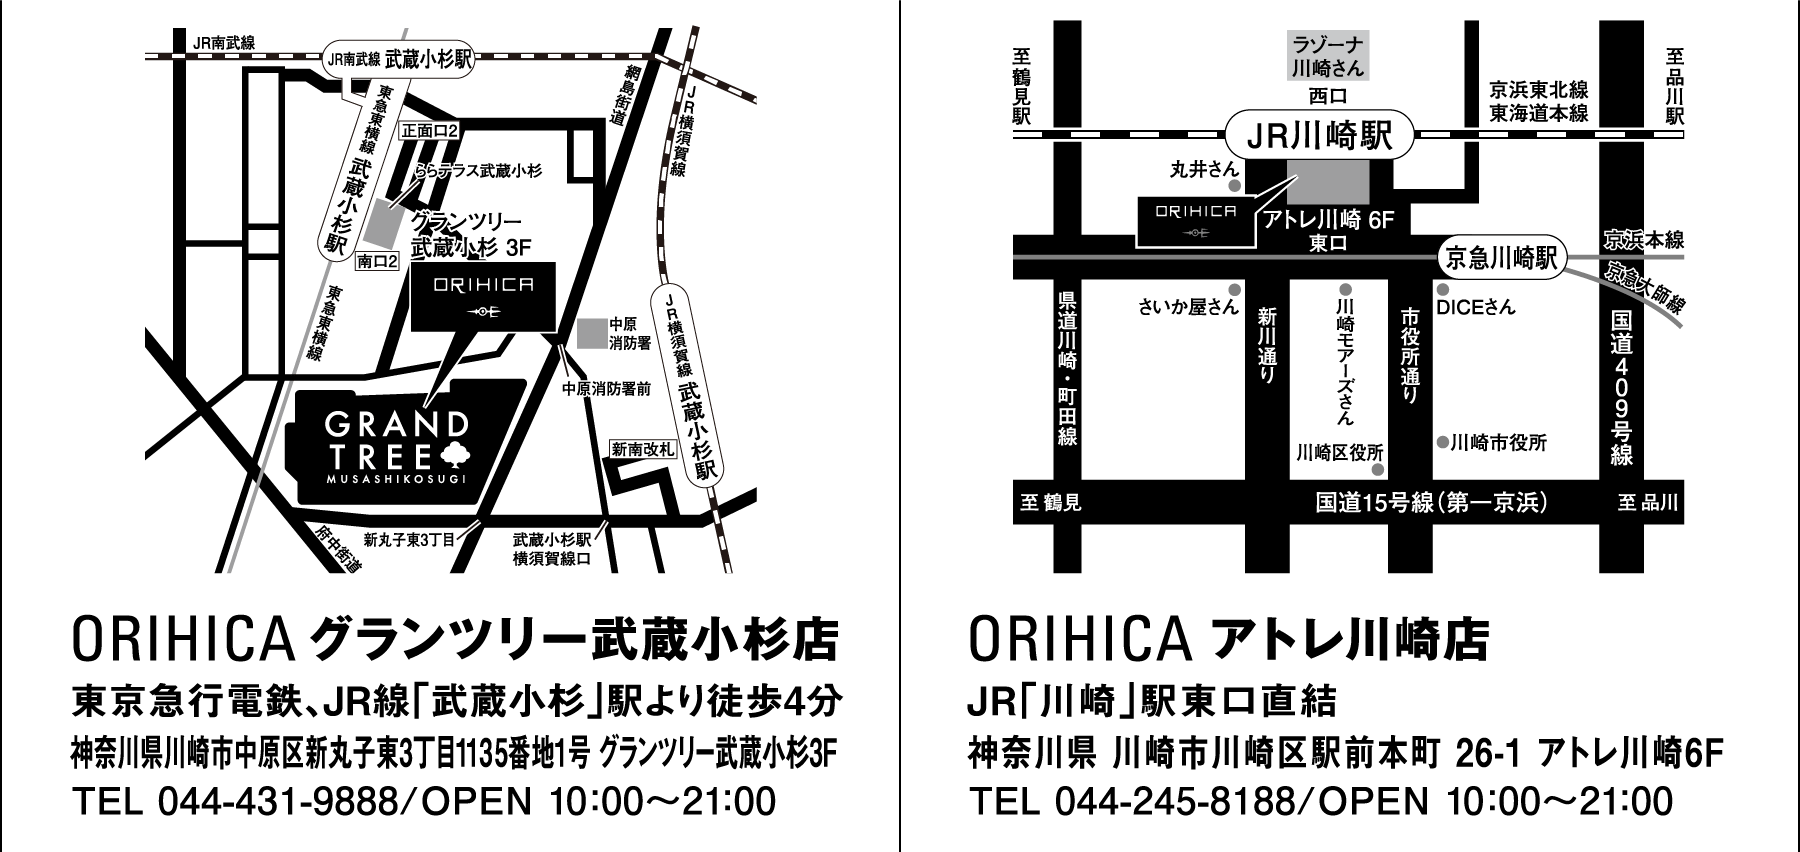 ORIHICAグランツリー武蔵小杉店 ORIHICAアトレ川崎店